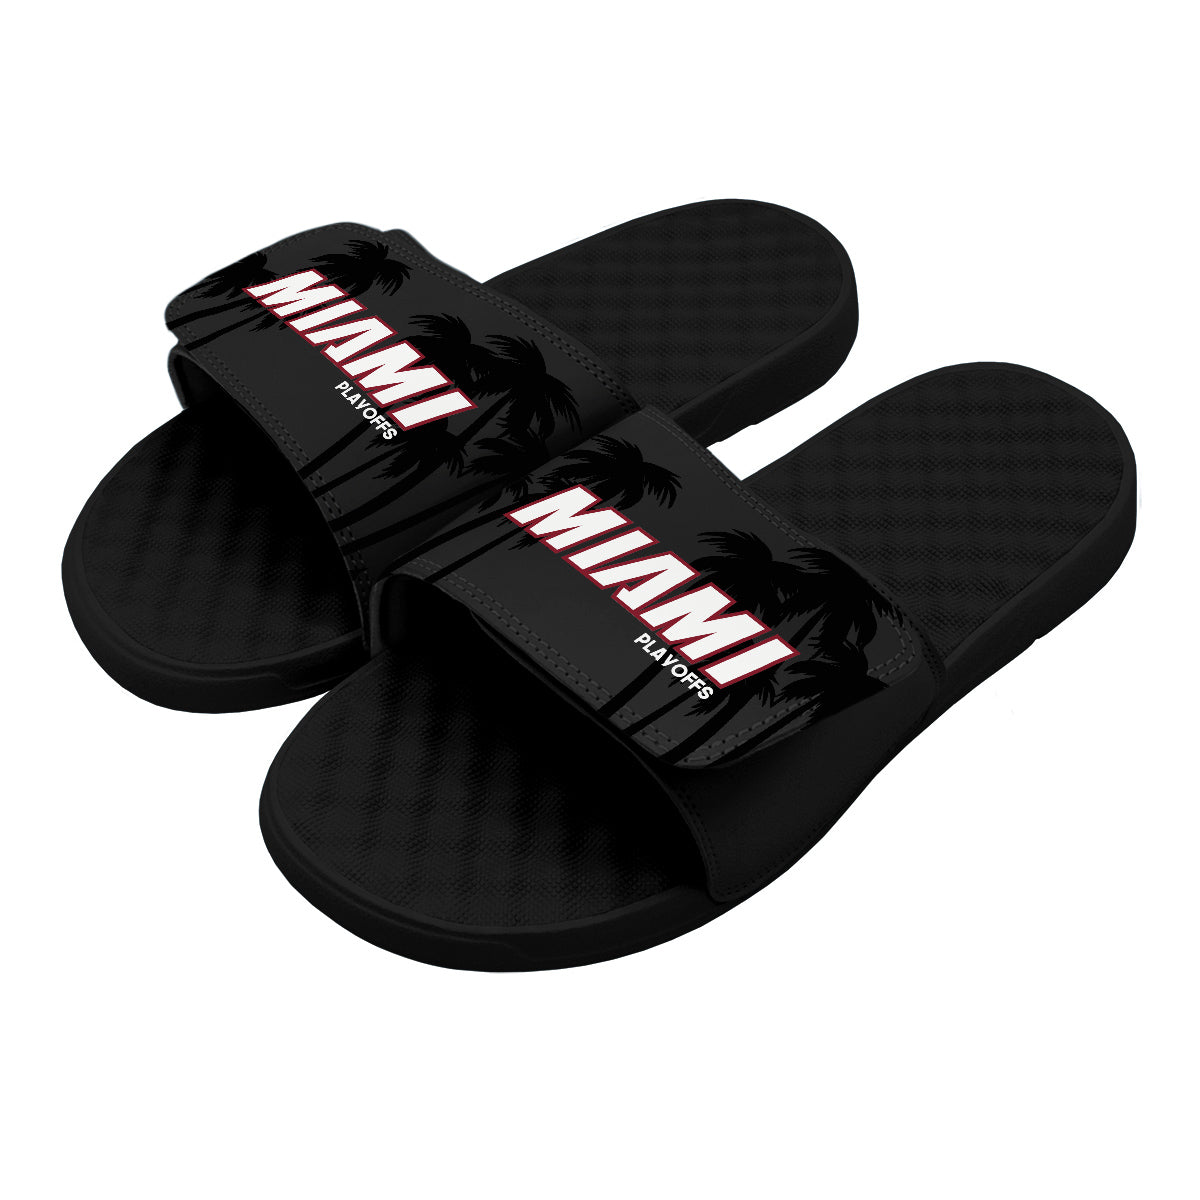 islide sandals